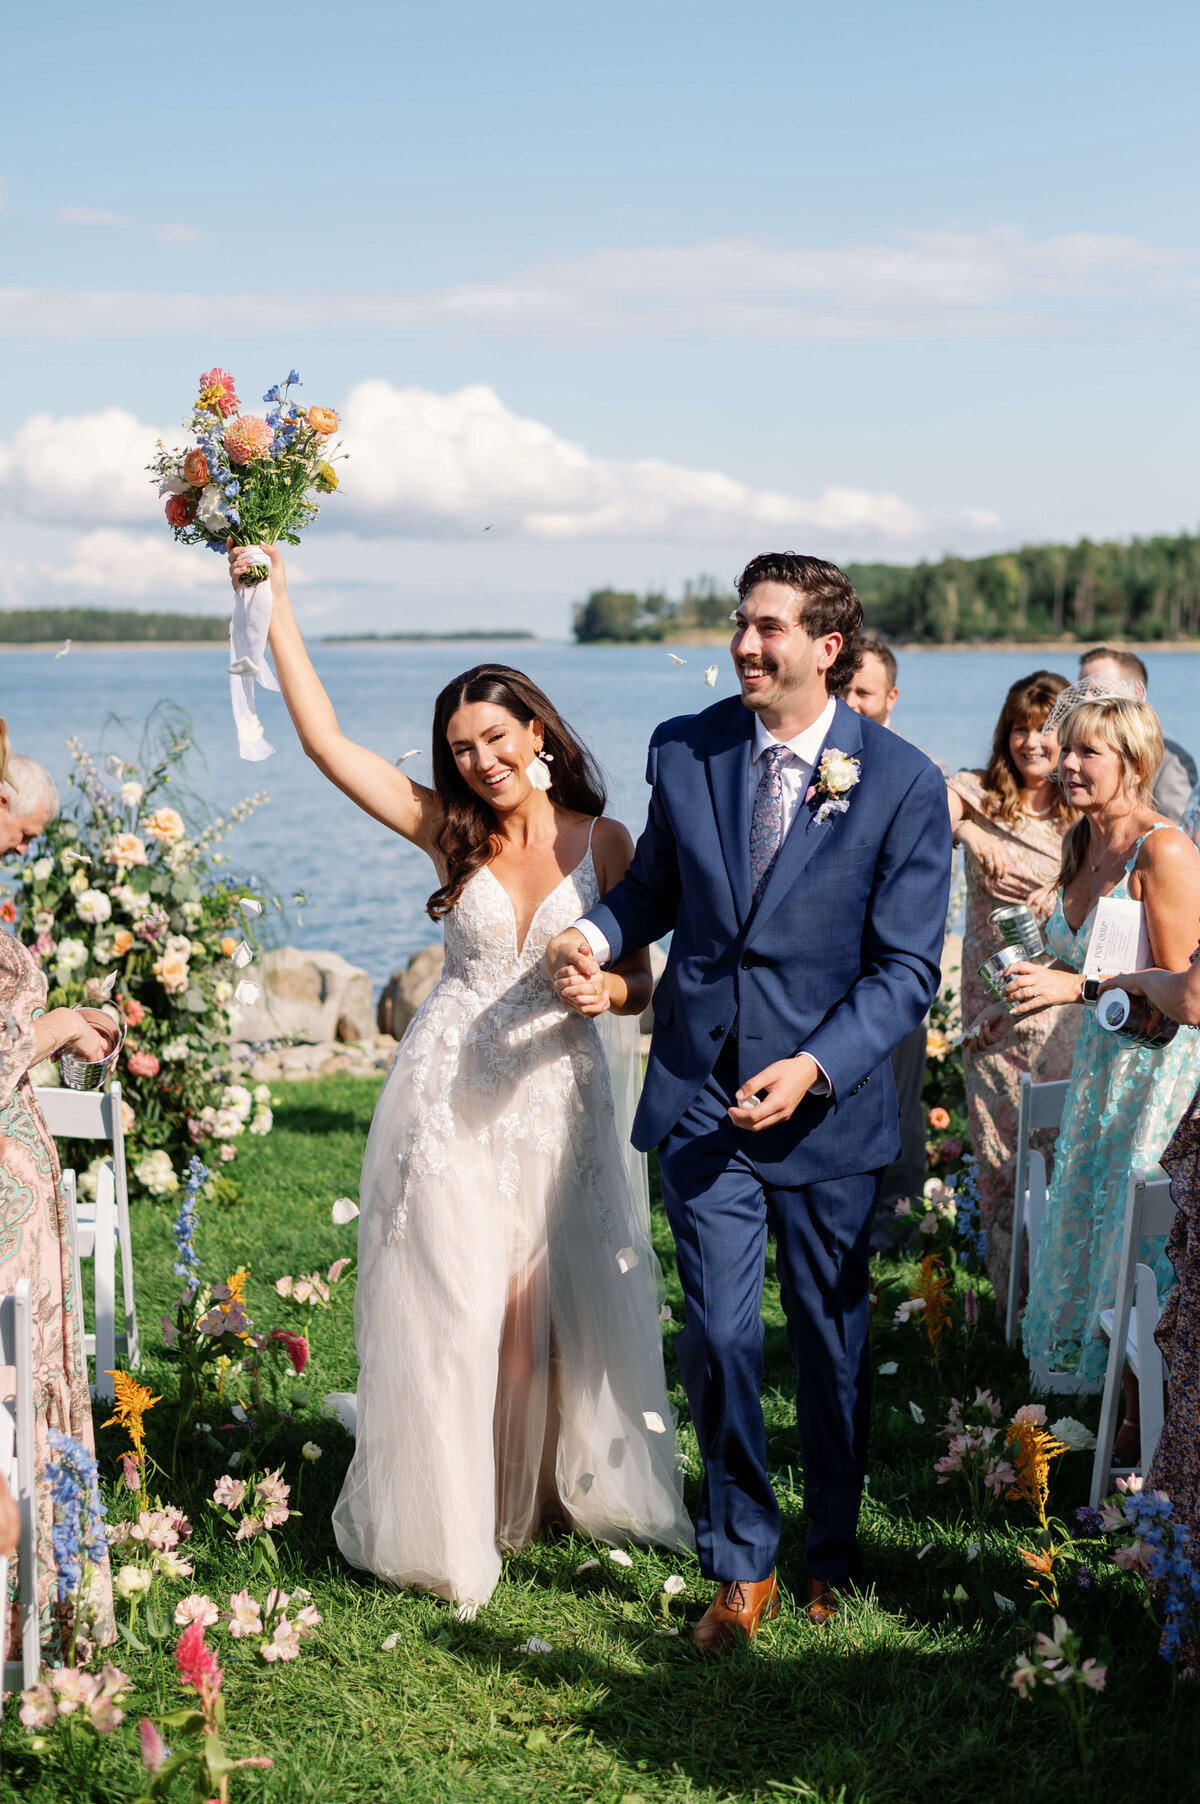 Bride and groom walking back down the aisle after wedding ceremony at Oak Island Resort Wedding, Nova Scotia